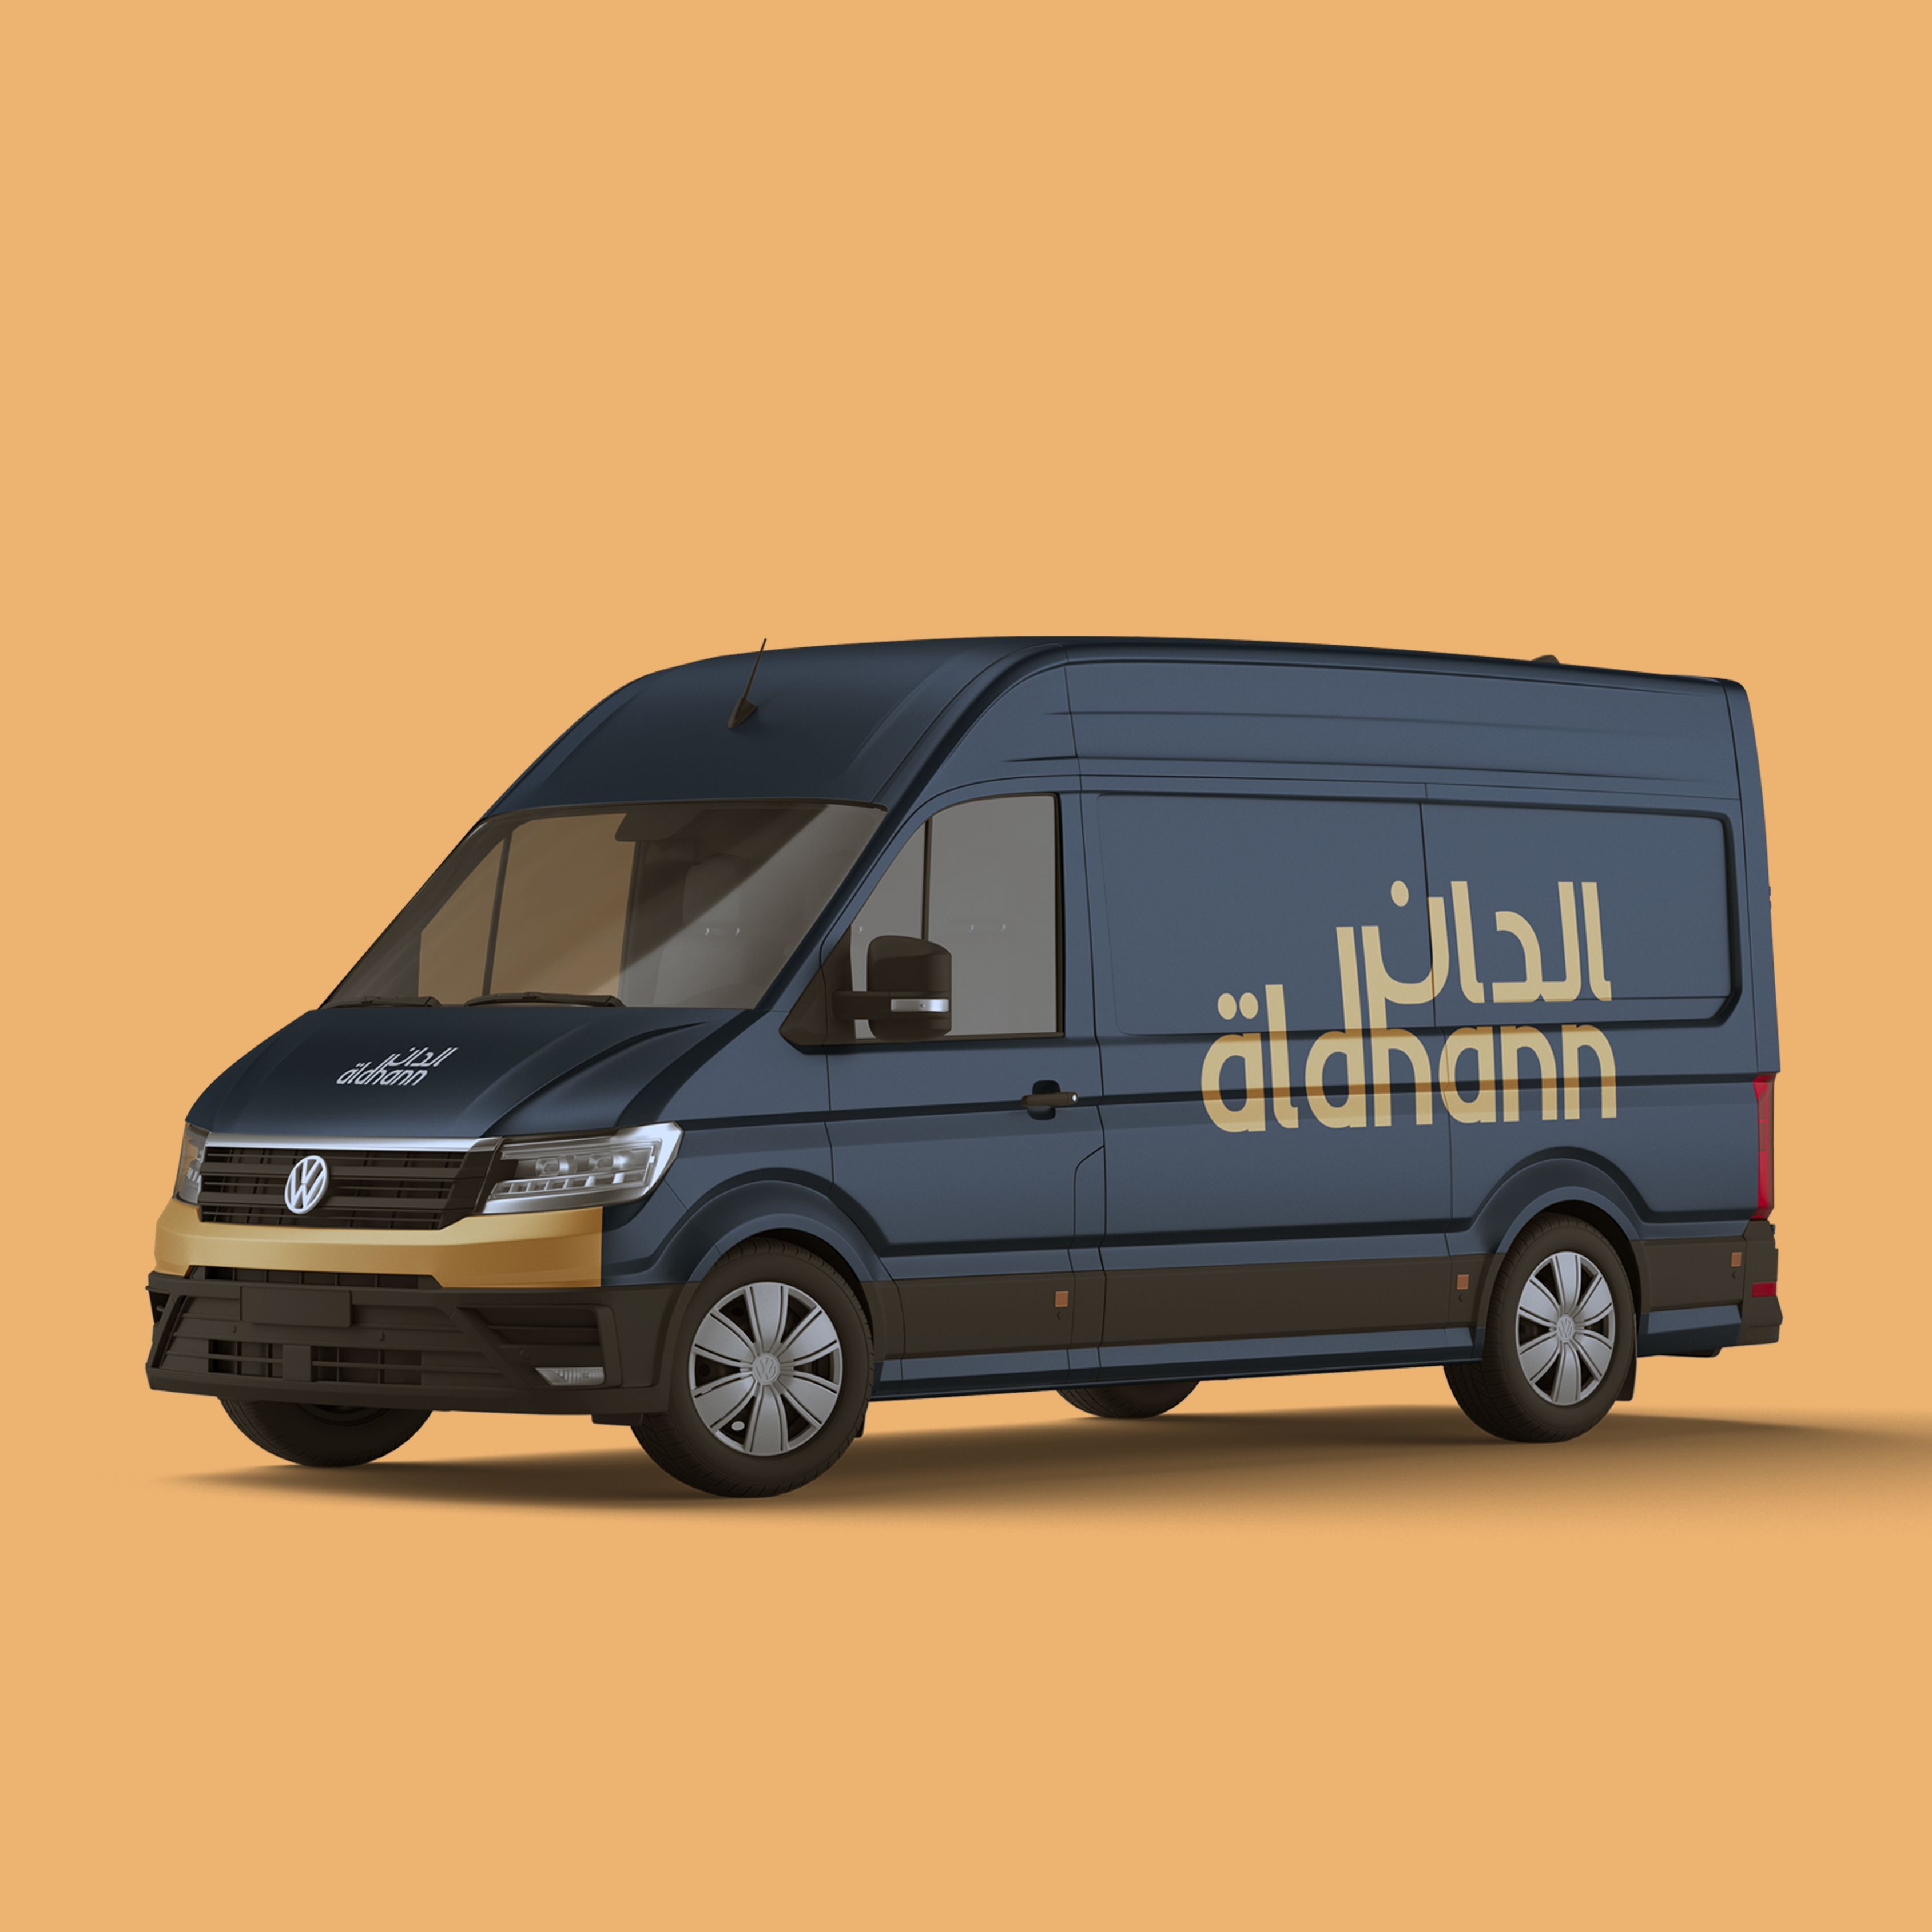 aldhann website  mockup | Binocular Advertising